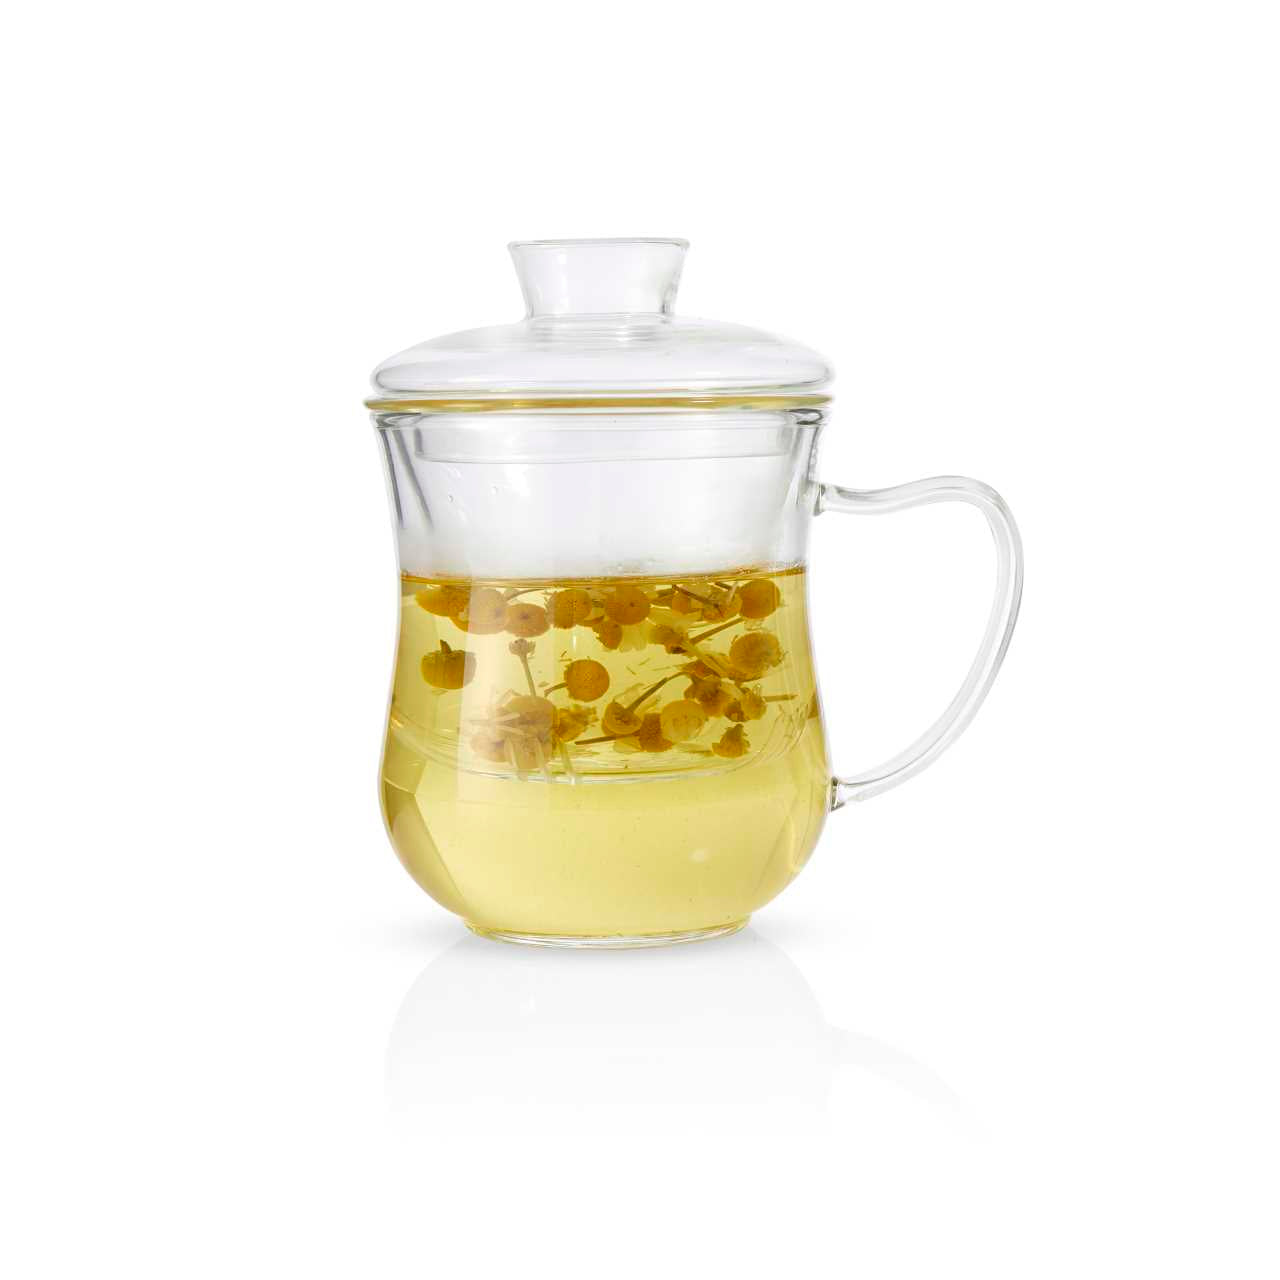 Infuser Mug For Loose Leaf Tea with Chamomile tea brewed